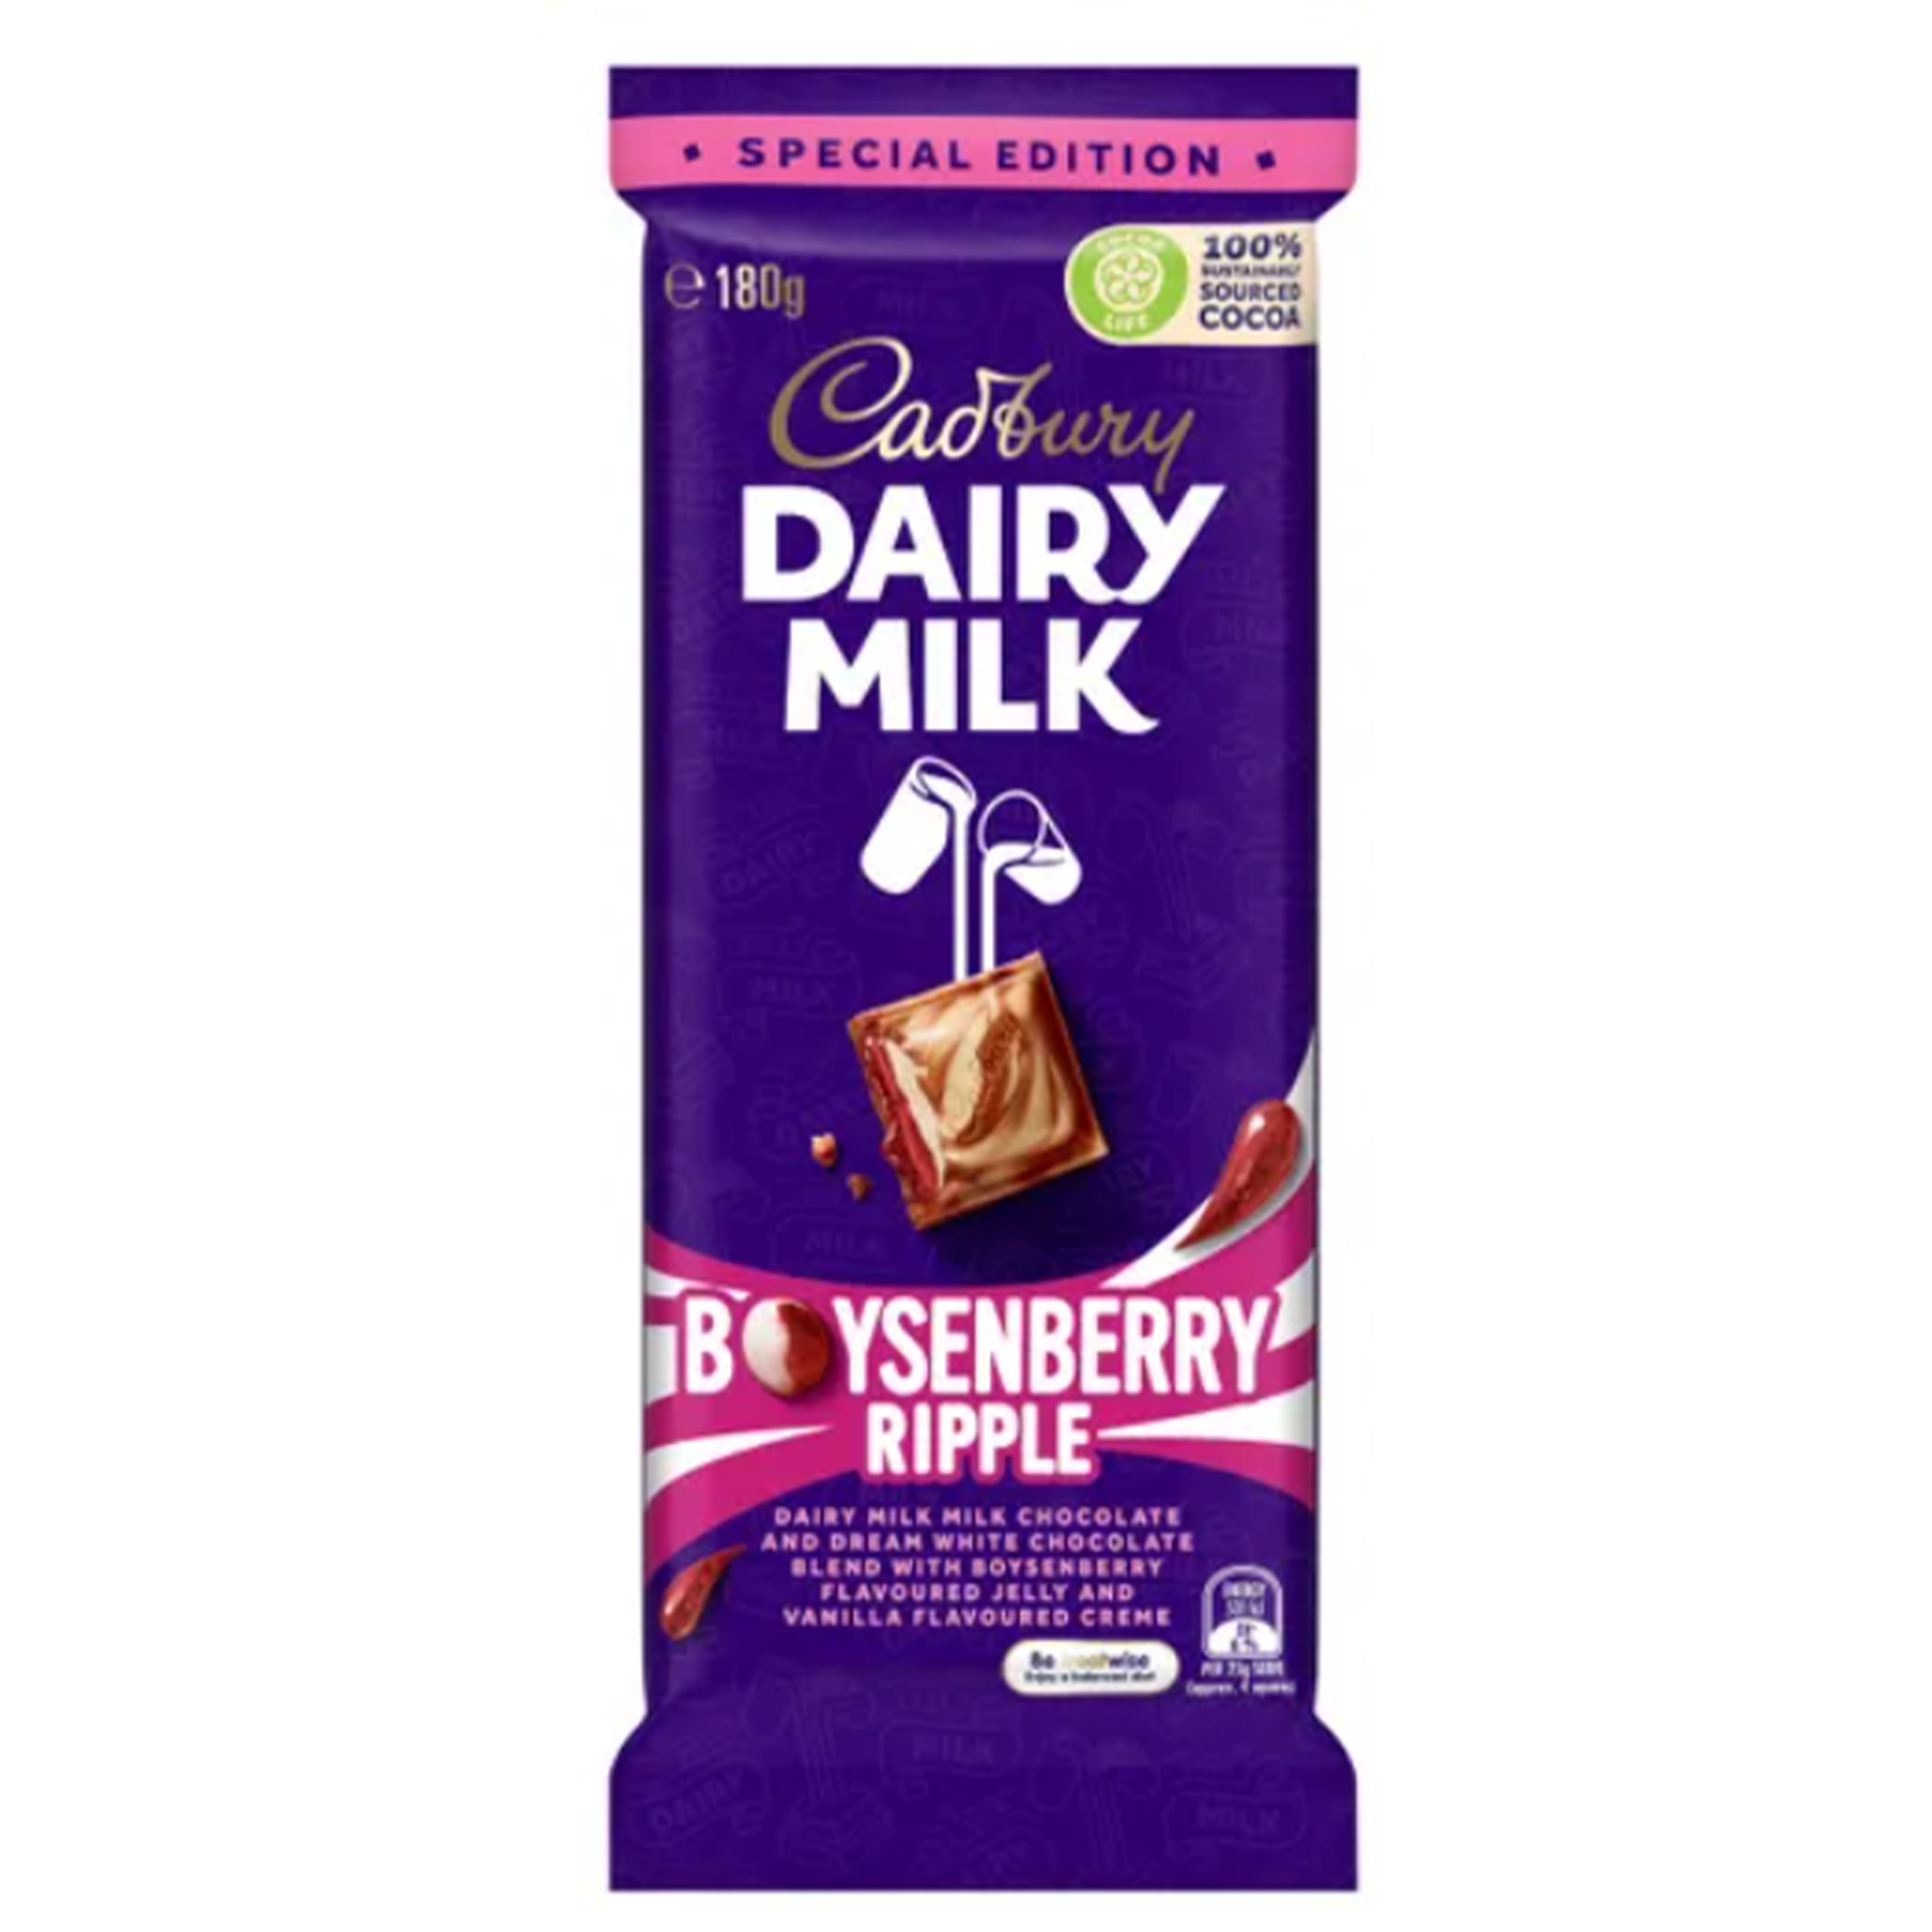 Cadbury Dairy Milk Boysenberry Ripple (AUS)